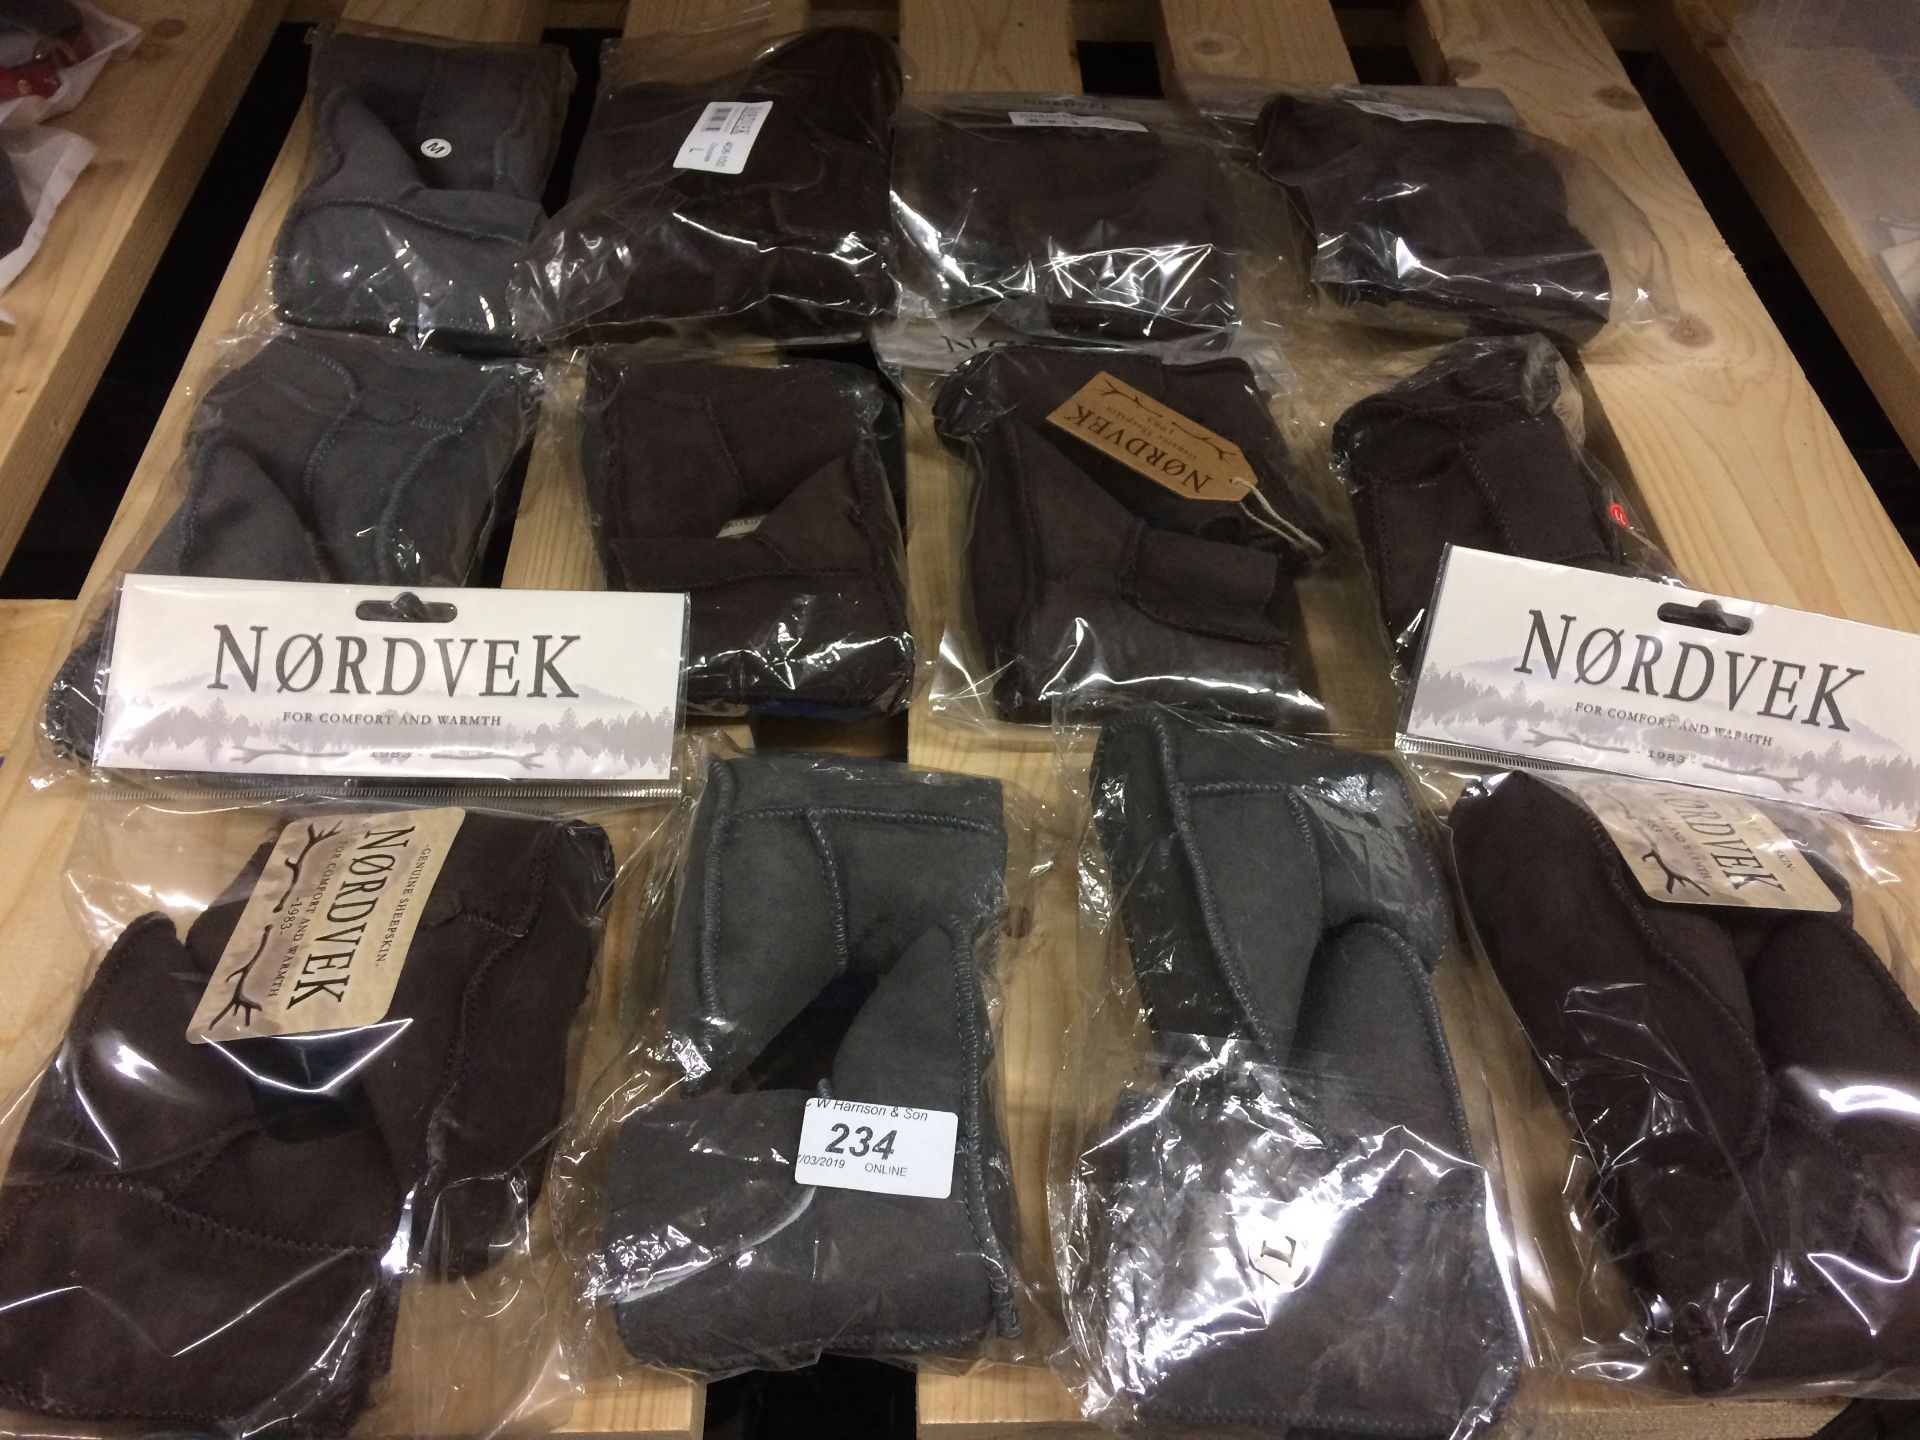 12 x assorted pairs of children's sheepskin boots by Nordvek